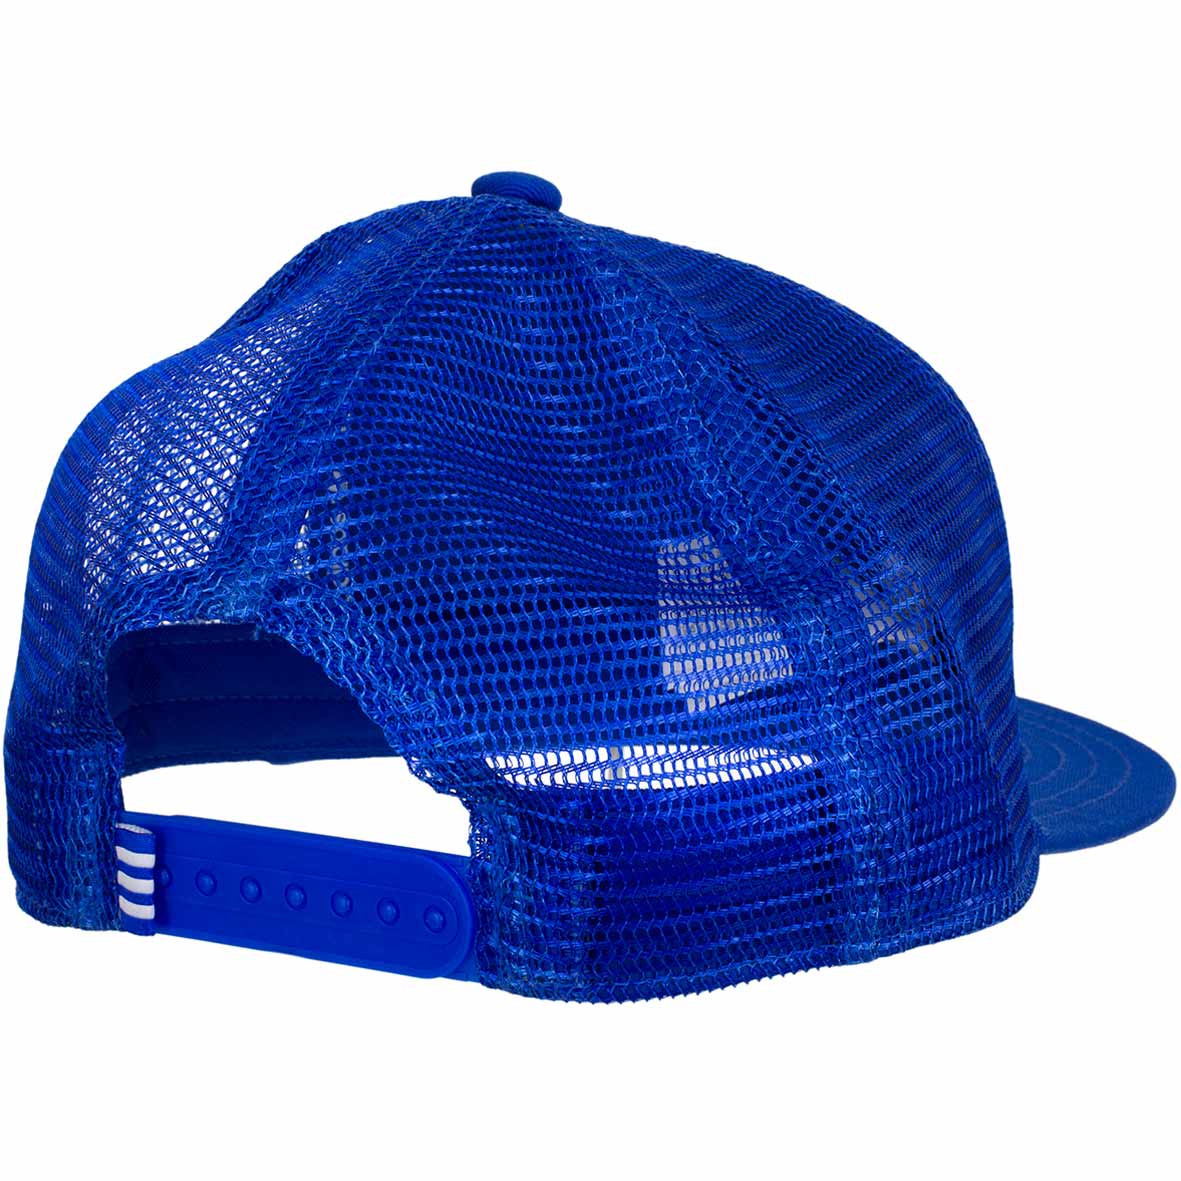 ☆ Adidas Originals Snapback Cap Trefoil Trucker blau - hier bestellen!